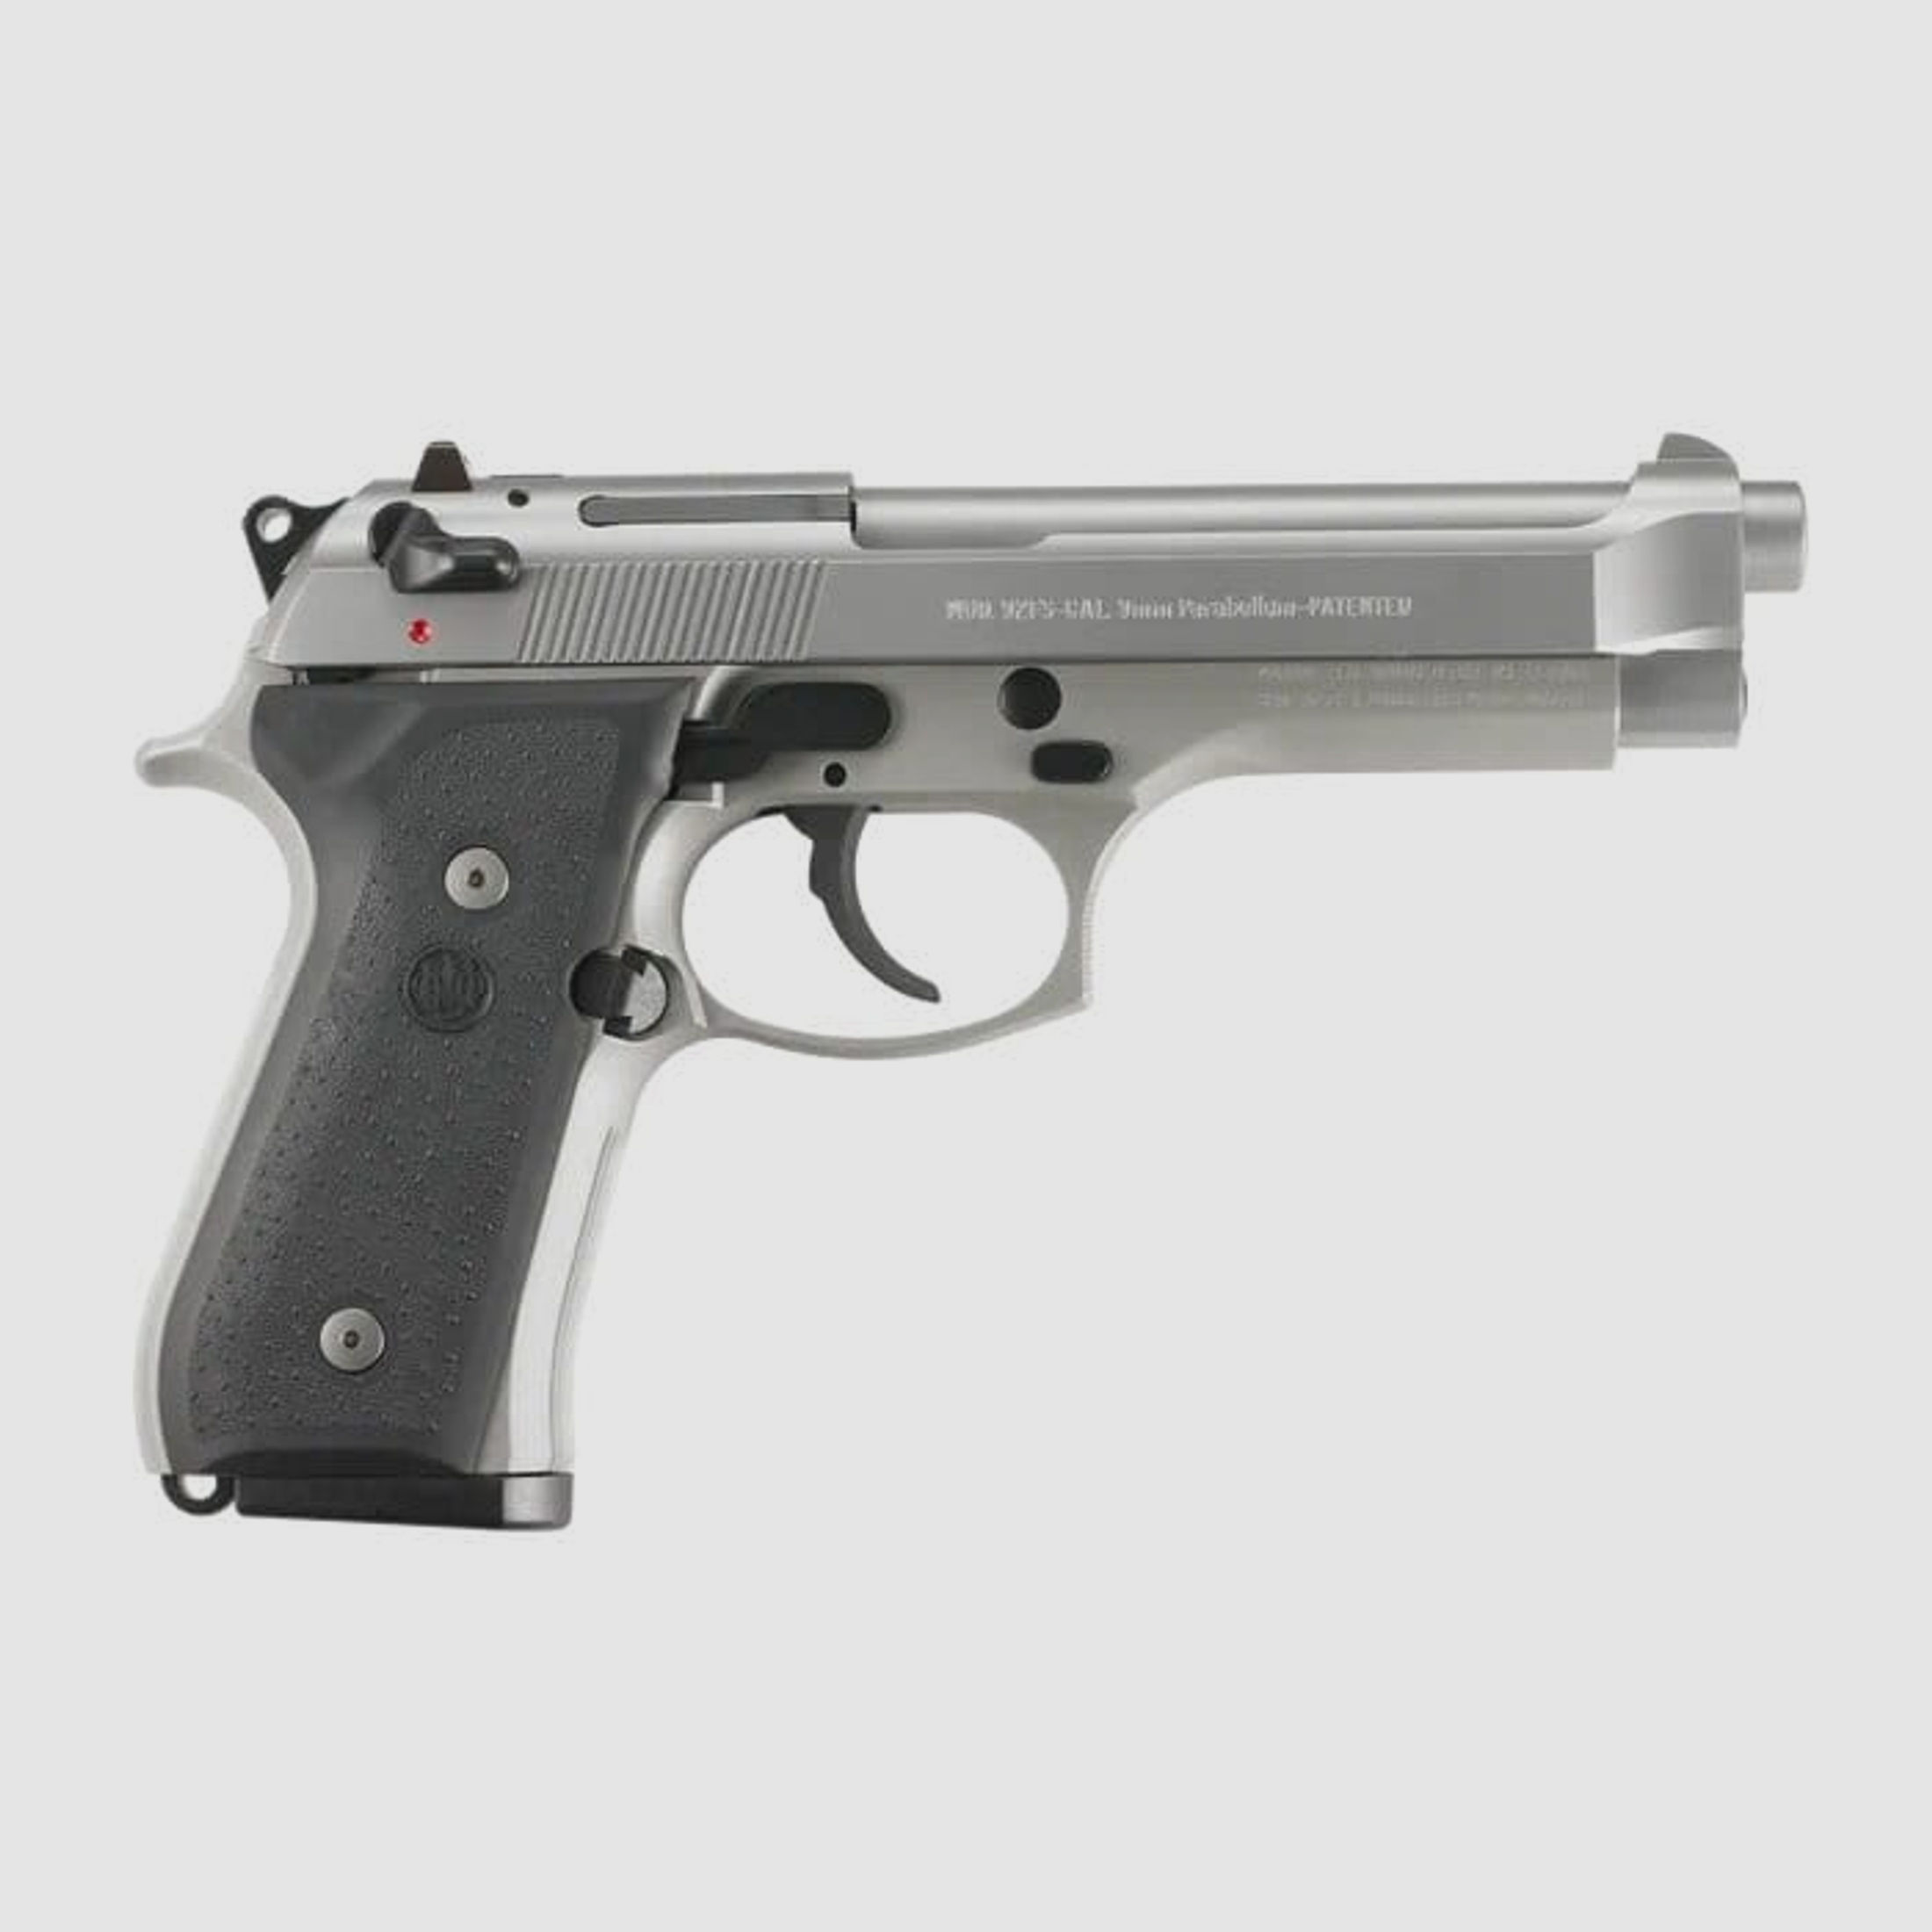 Beretta Pistole 92 FS Inox 9 mm Luger